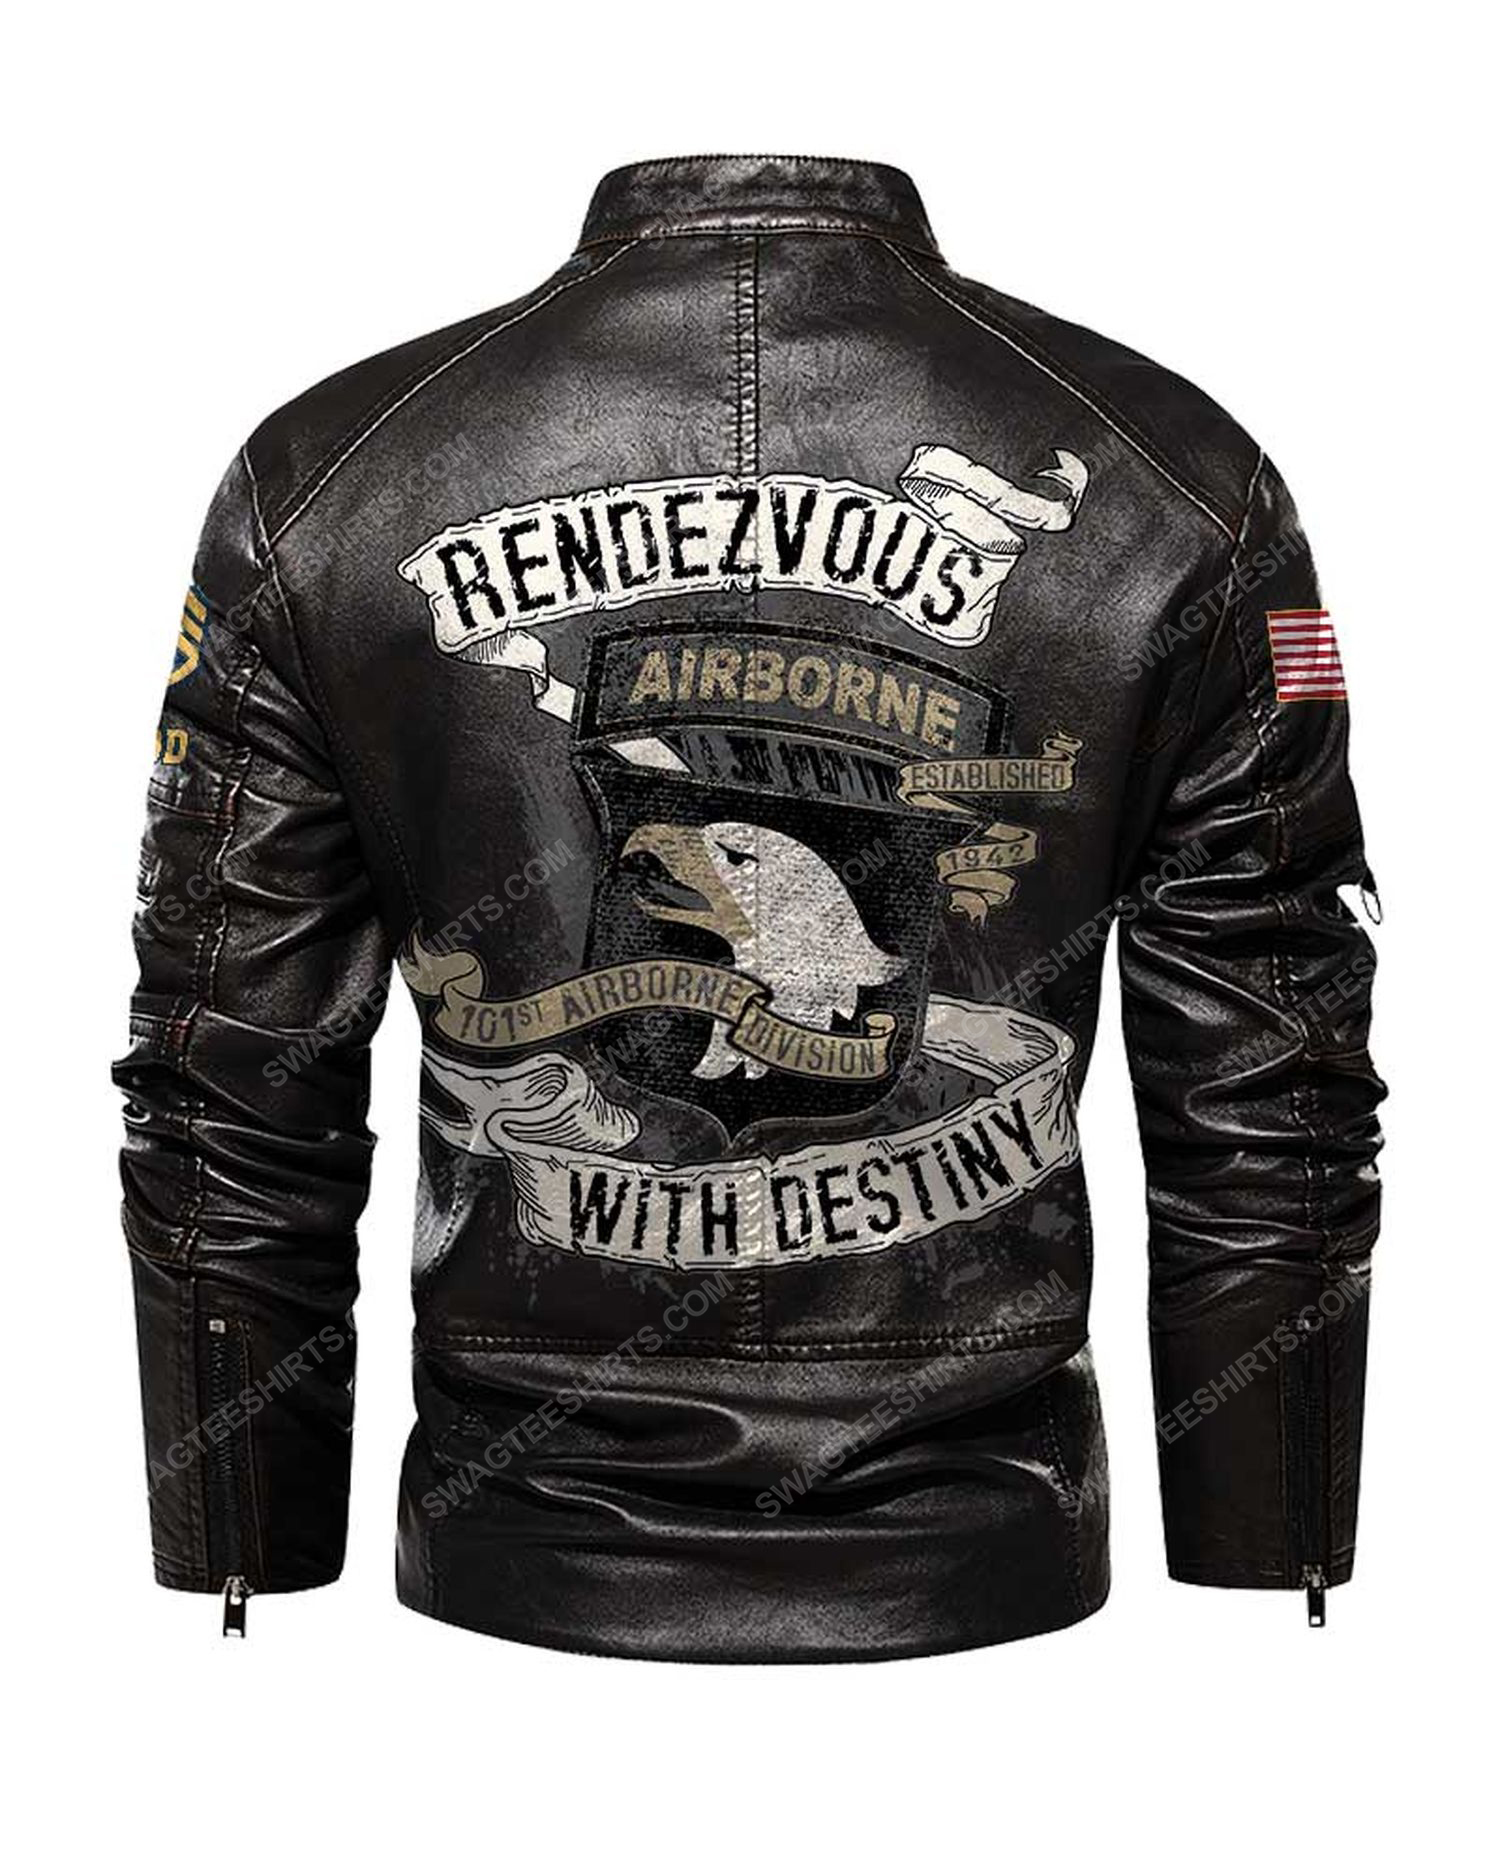 Custom airborne division rendezvous with destiny moto leather jacket - black